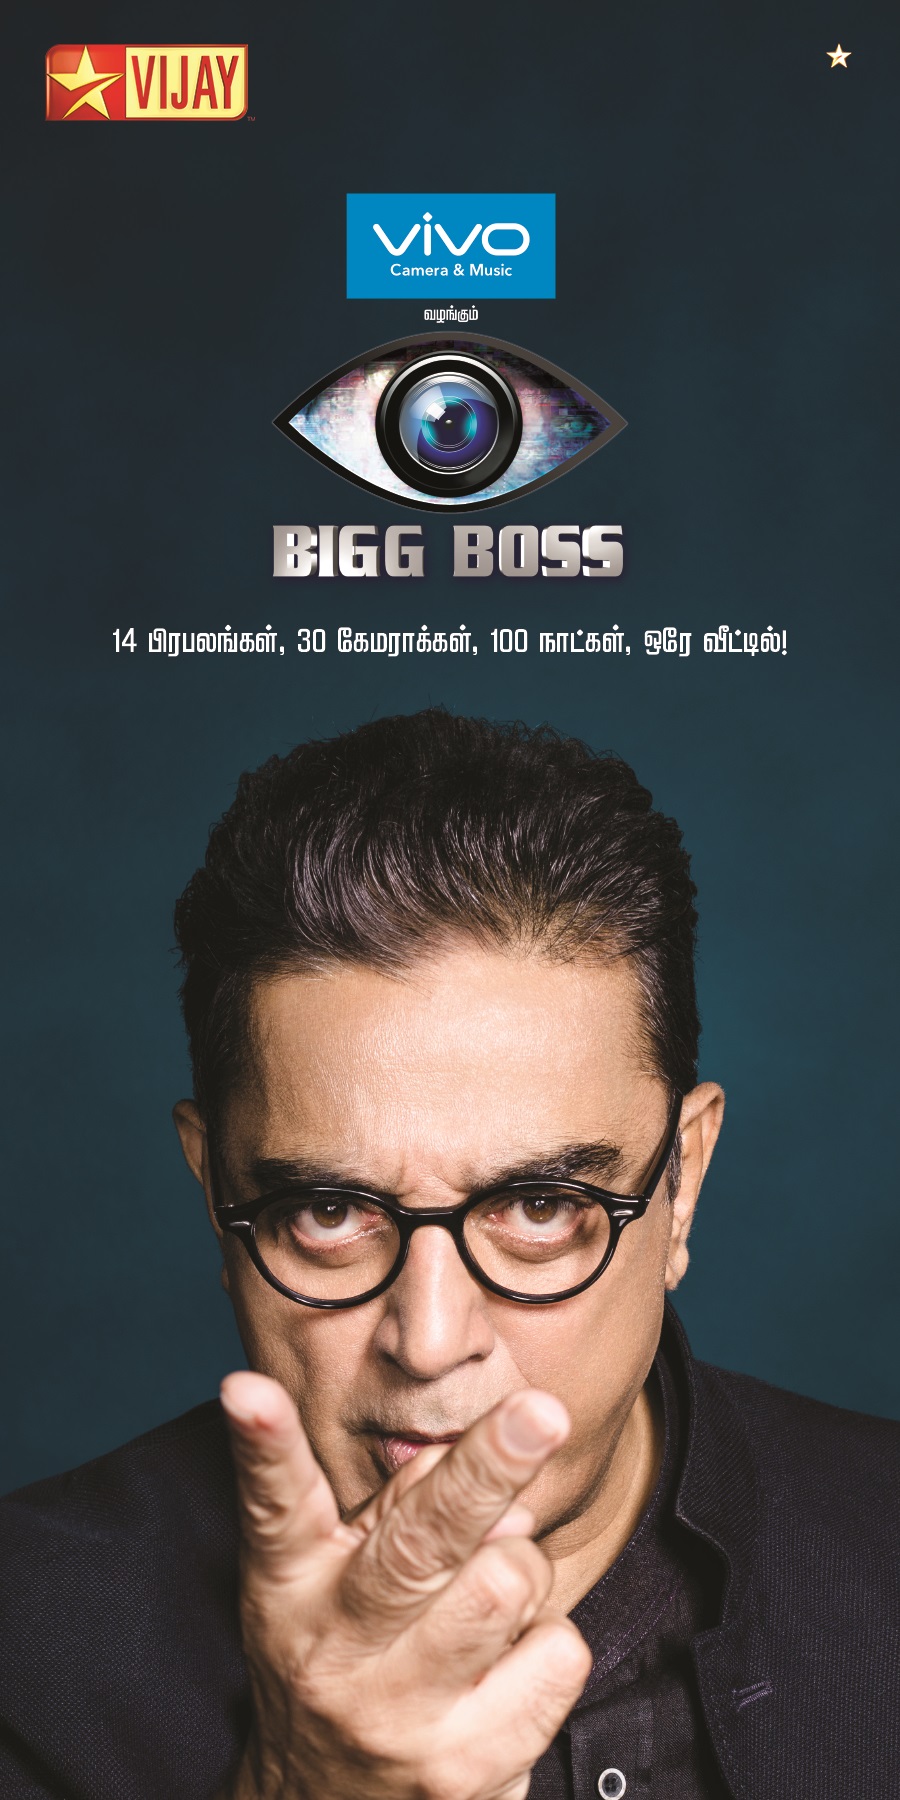 Big Boss Images (7)